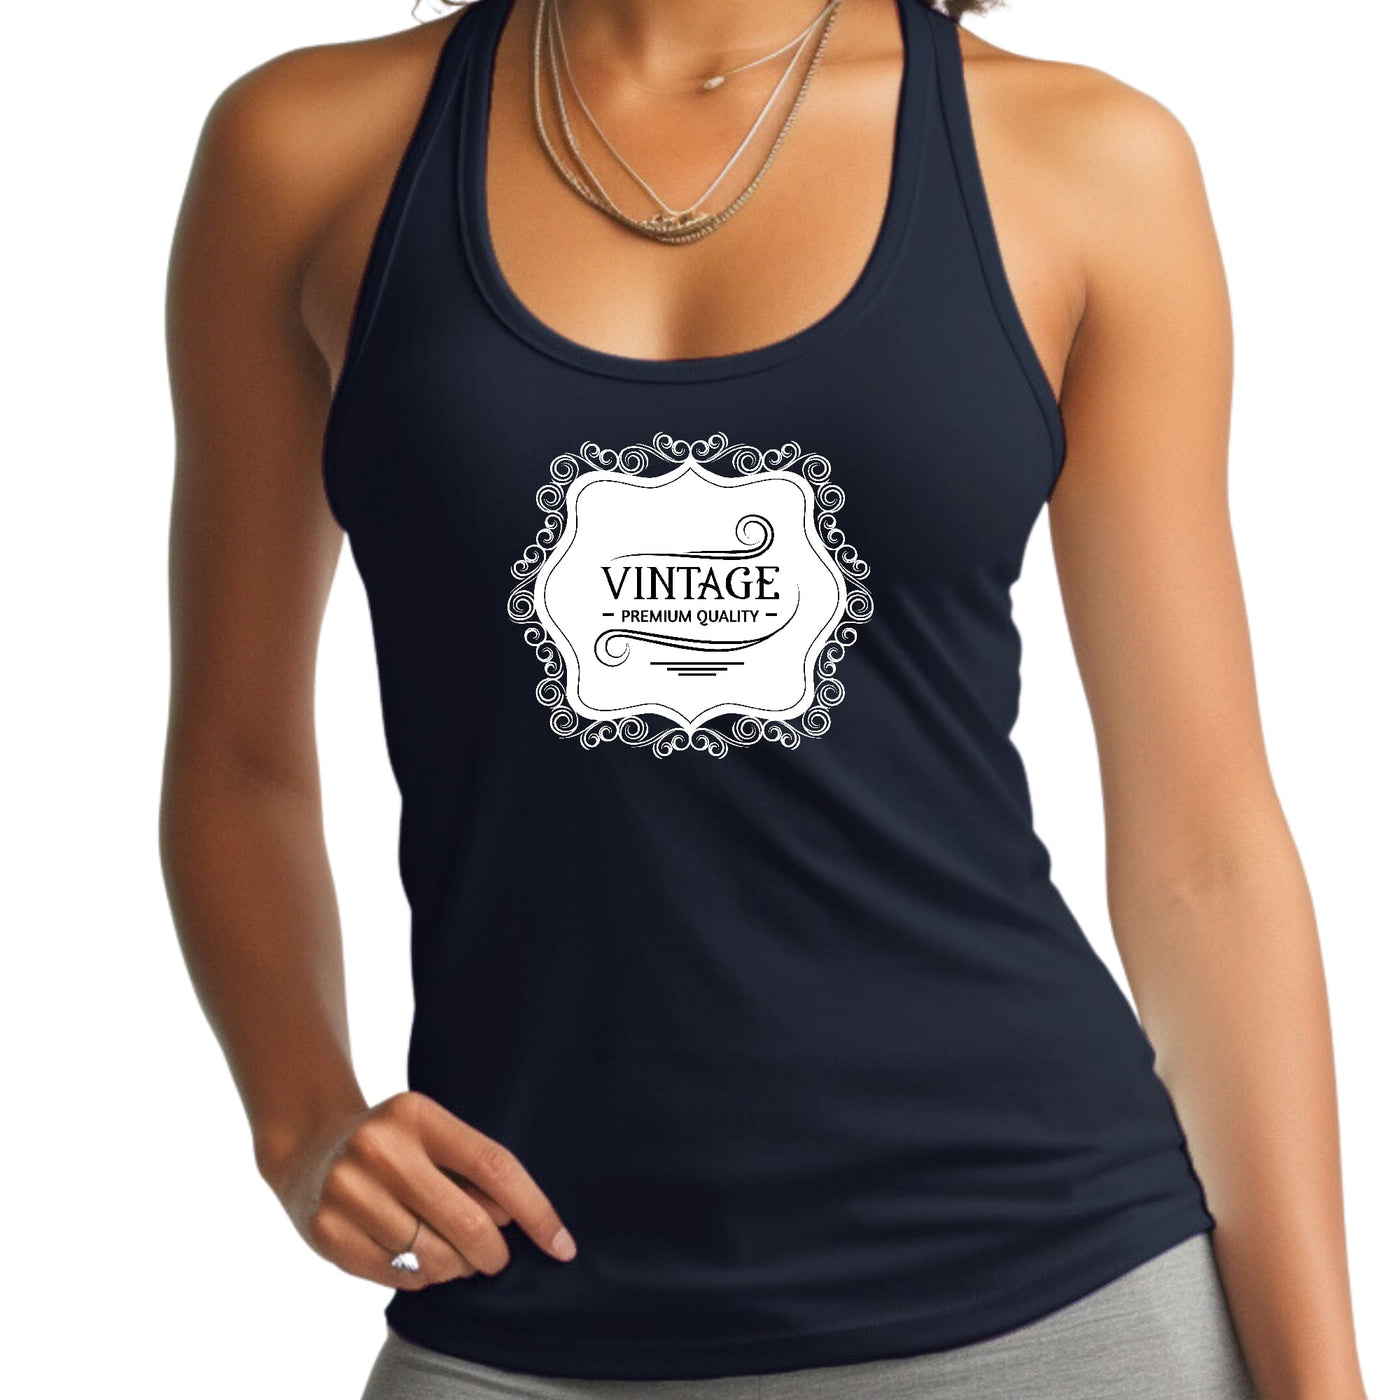 Womens Tank Top Fitness T - shirt Vintage Premium Quality White Black - Tops